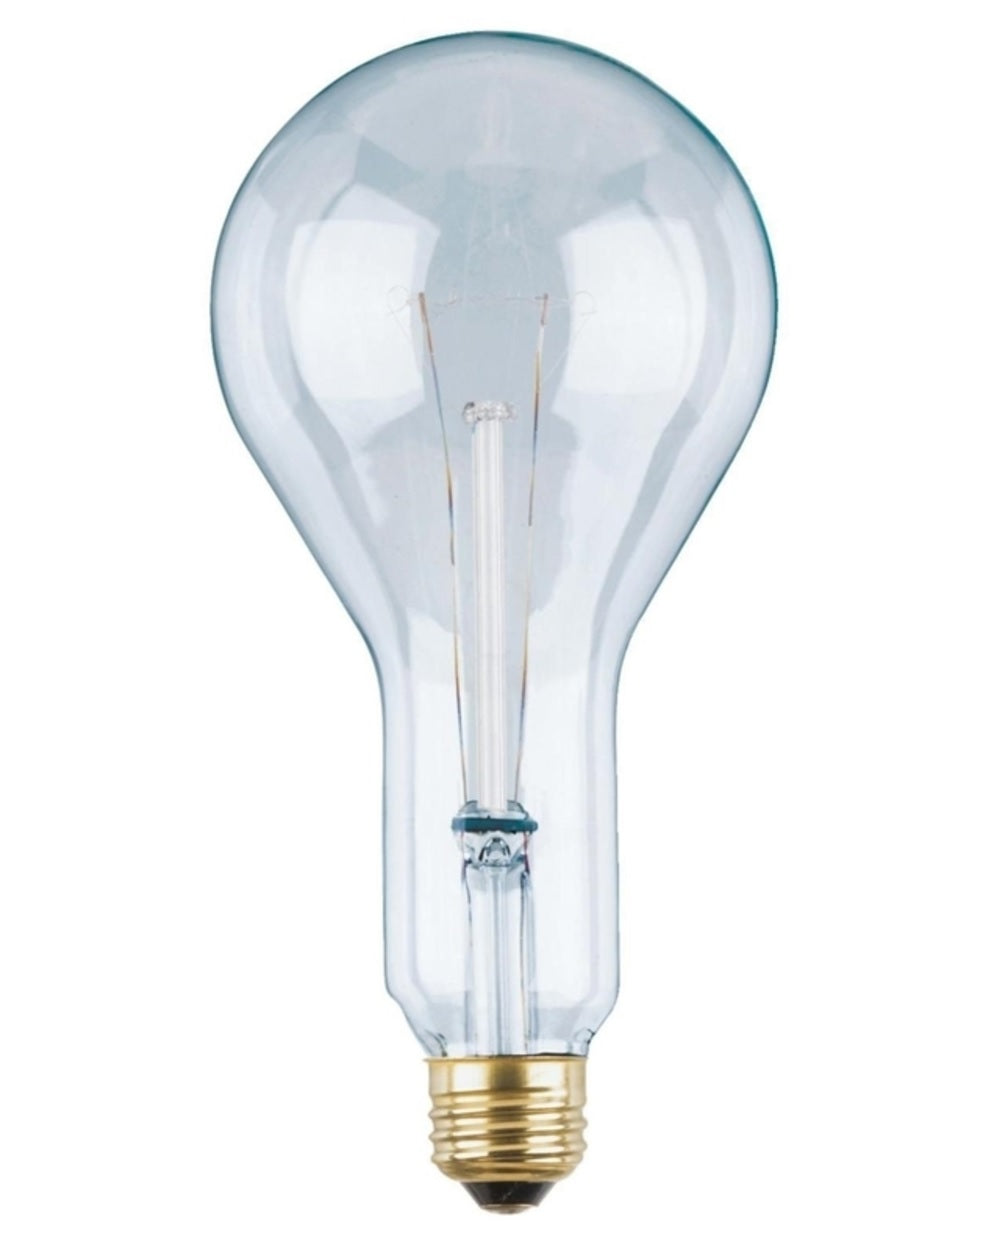 Westinghouse 03974 PS30 Incandescent Light Bulb, 300 Watts, 120 Volt